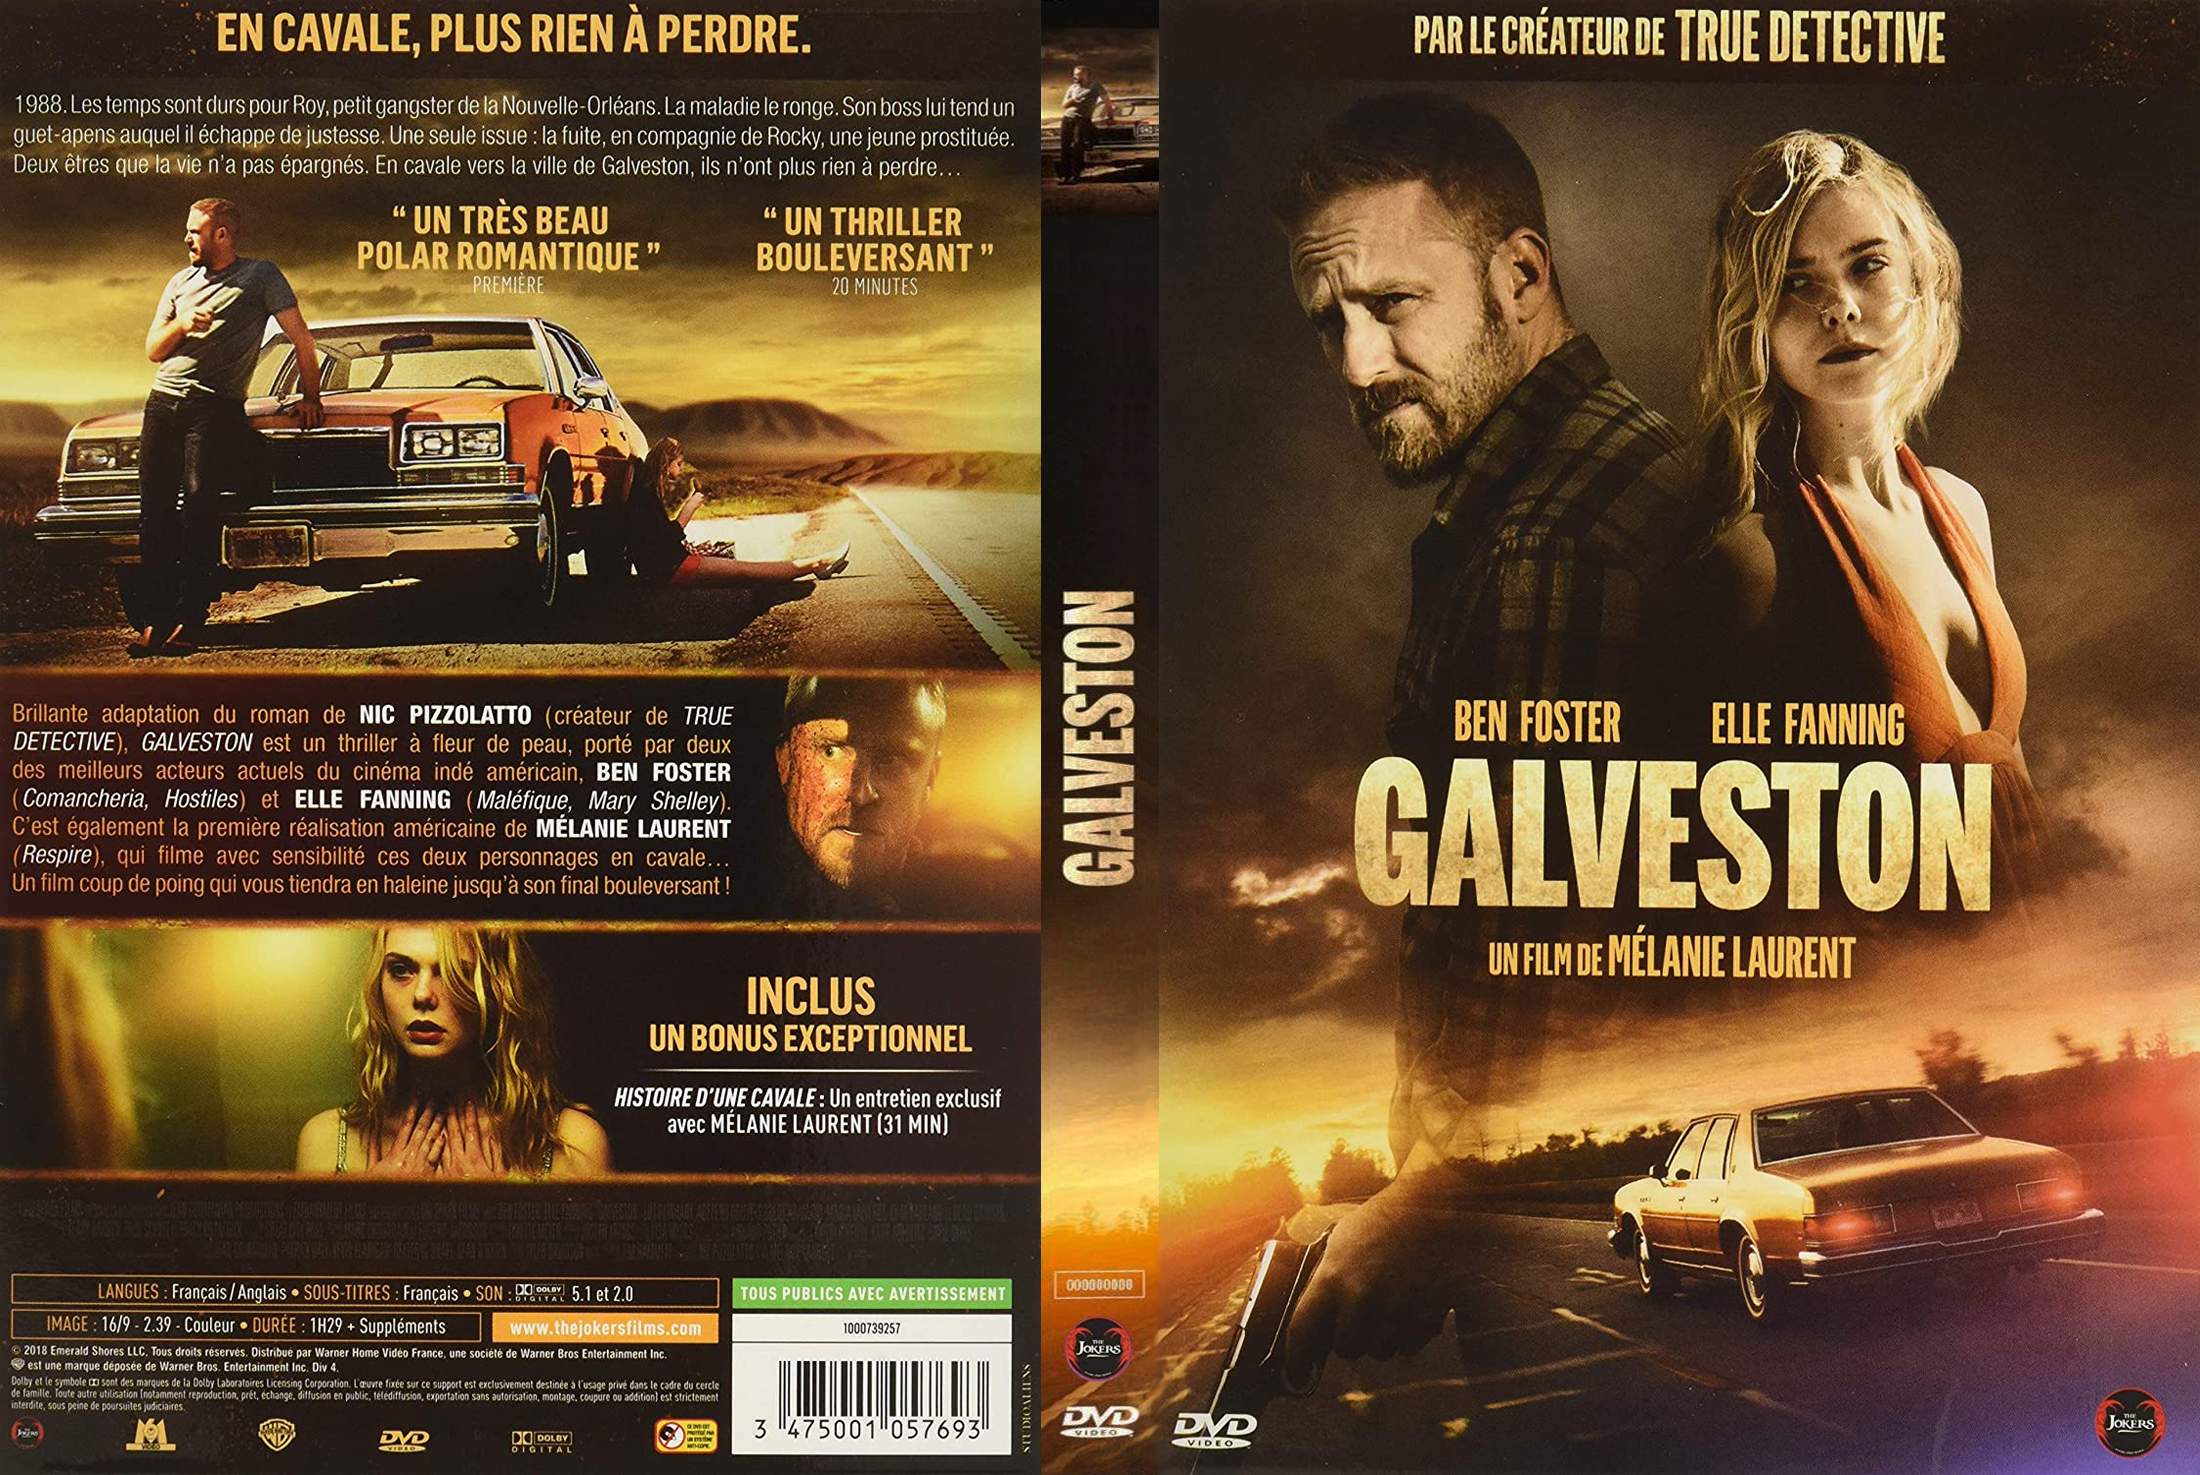 Jaquette DVD Galveston